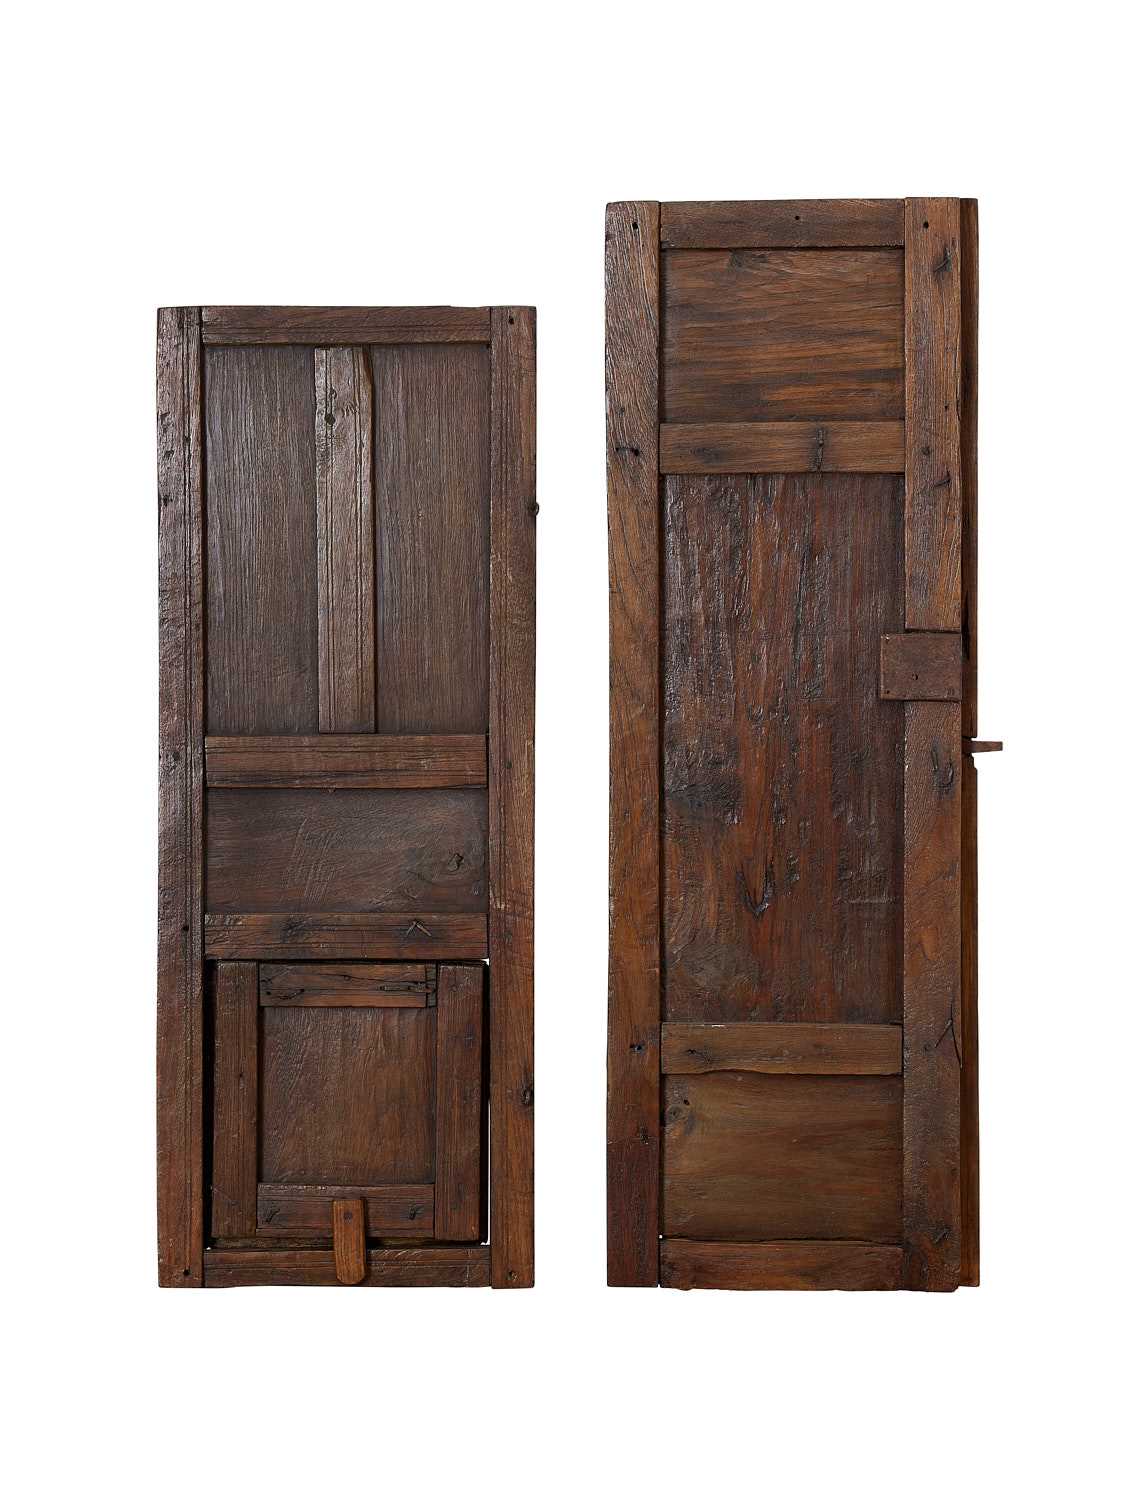 TWO 15TH CENTURY MAMLUK CARVED WOOD DOORS, EGYPT - Image 2 of 2